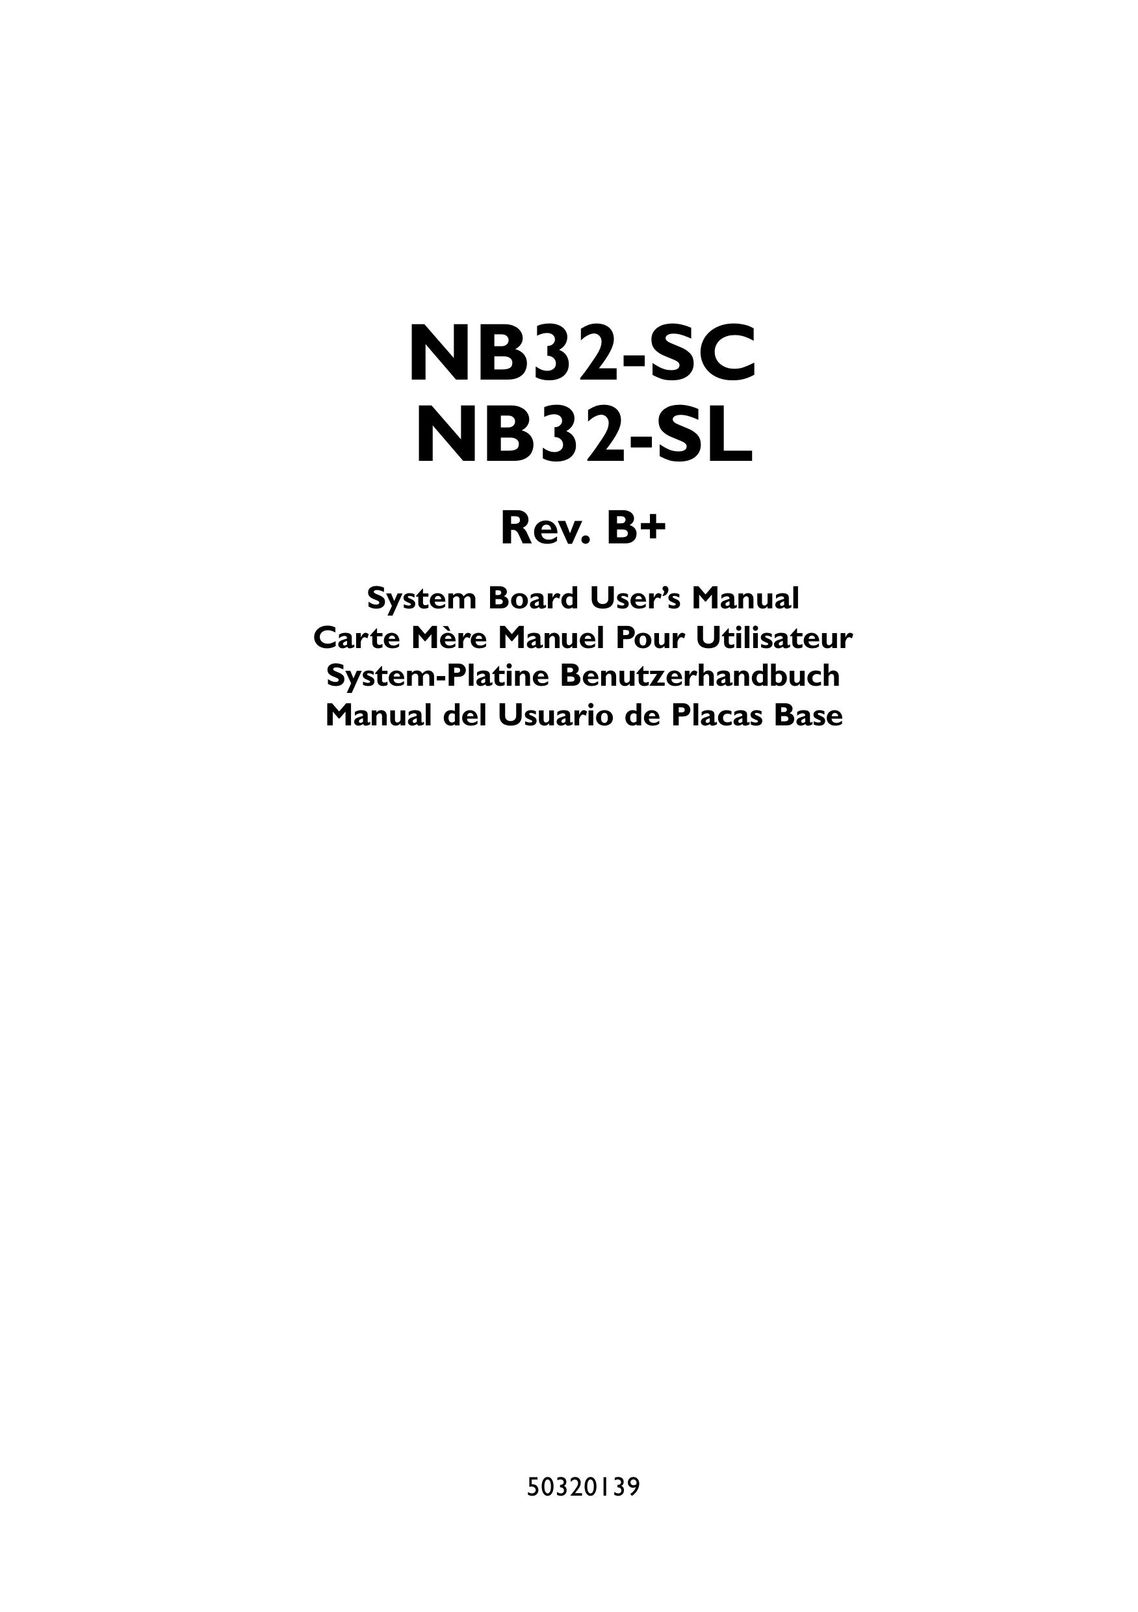 DFI NB32-SL Computer Hardware User Manual